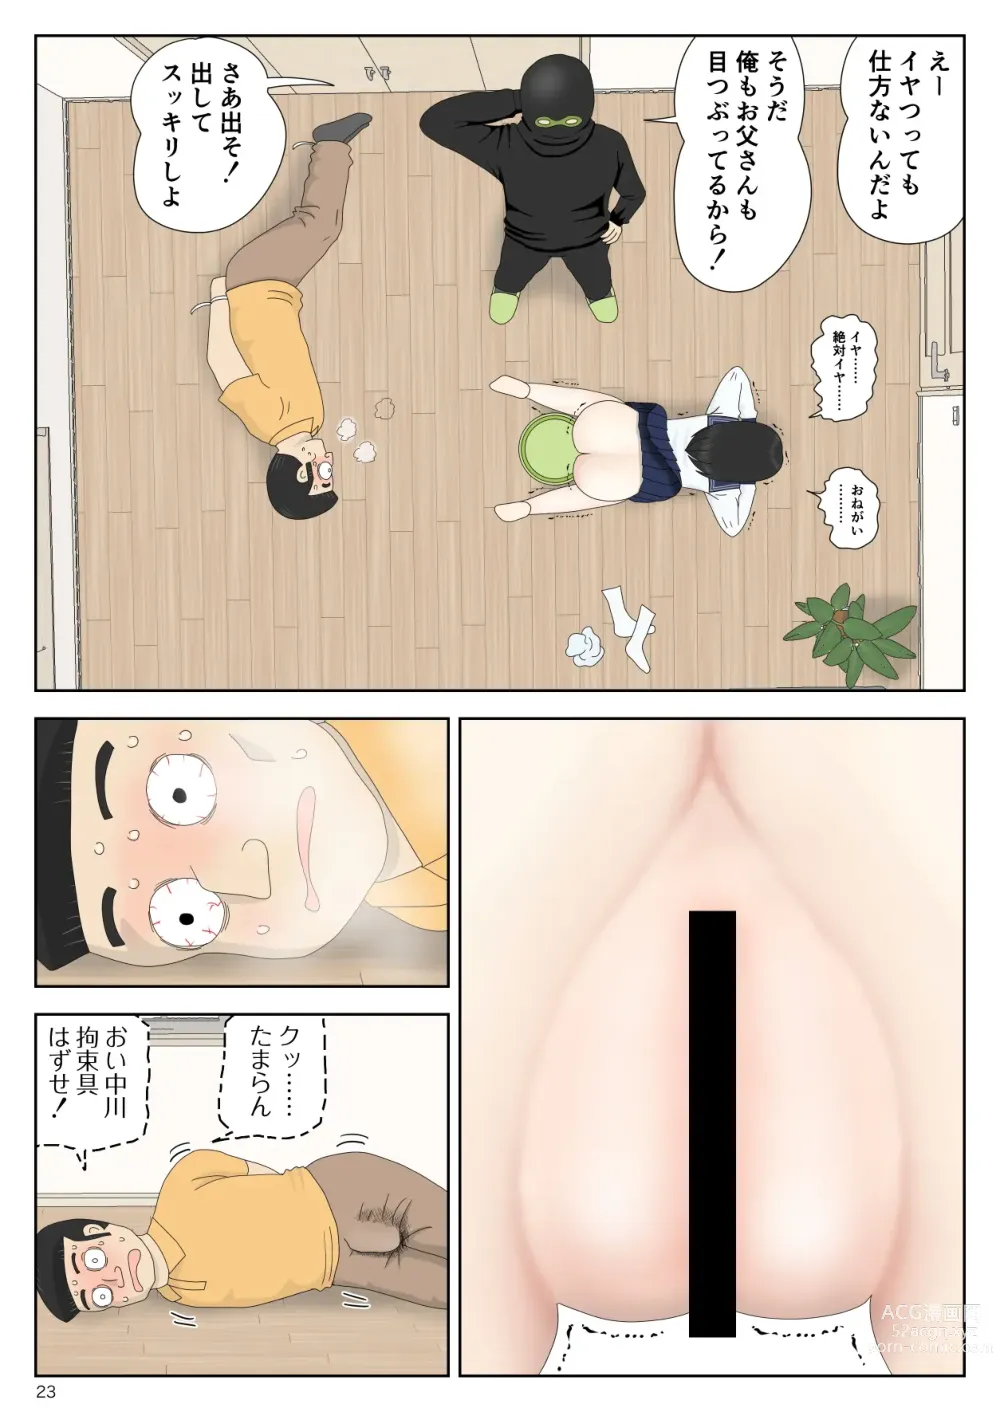 Page 23 of doujinshi Goutou no Yoru